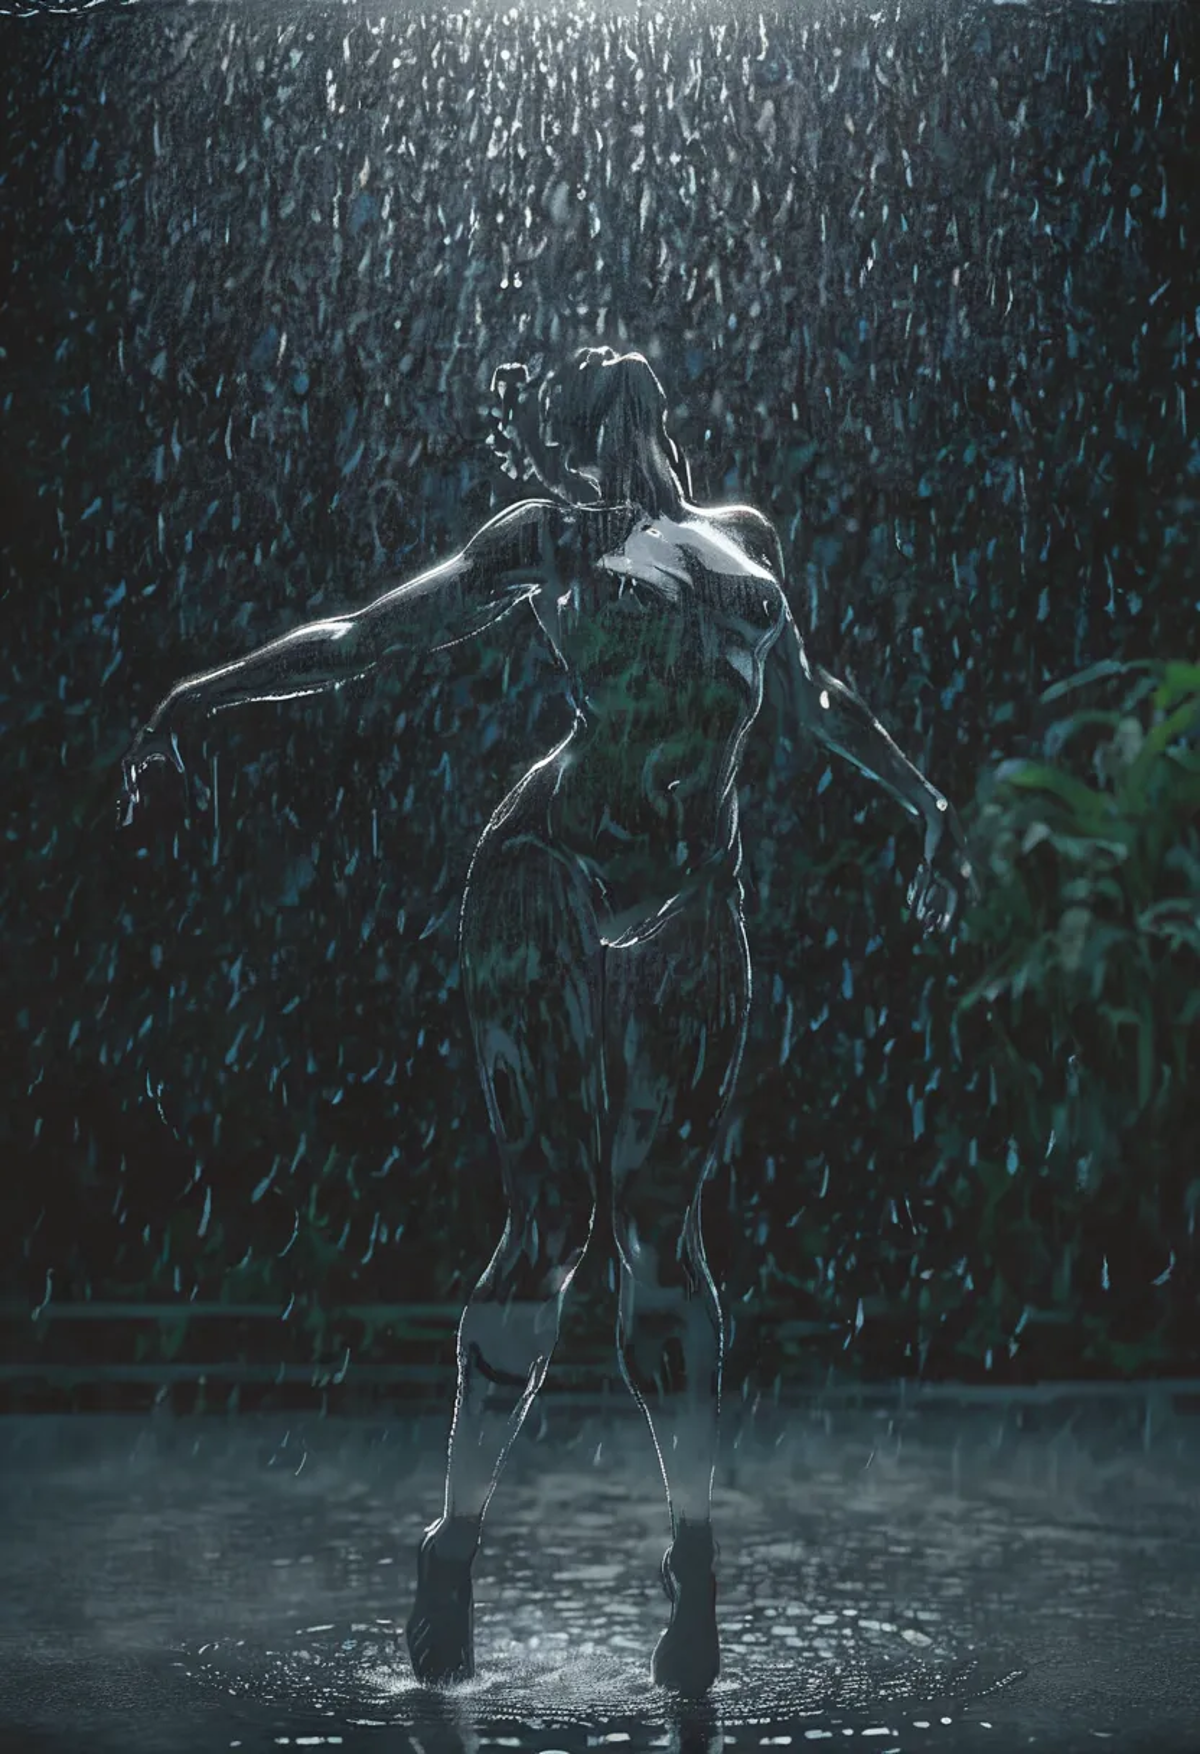 A woman in a silver dress dancing in the rain.